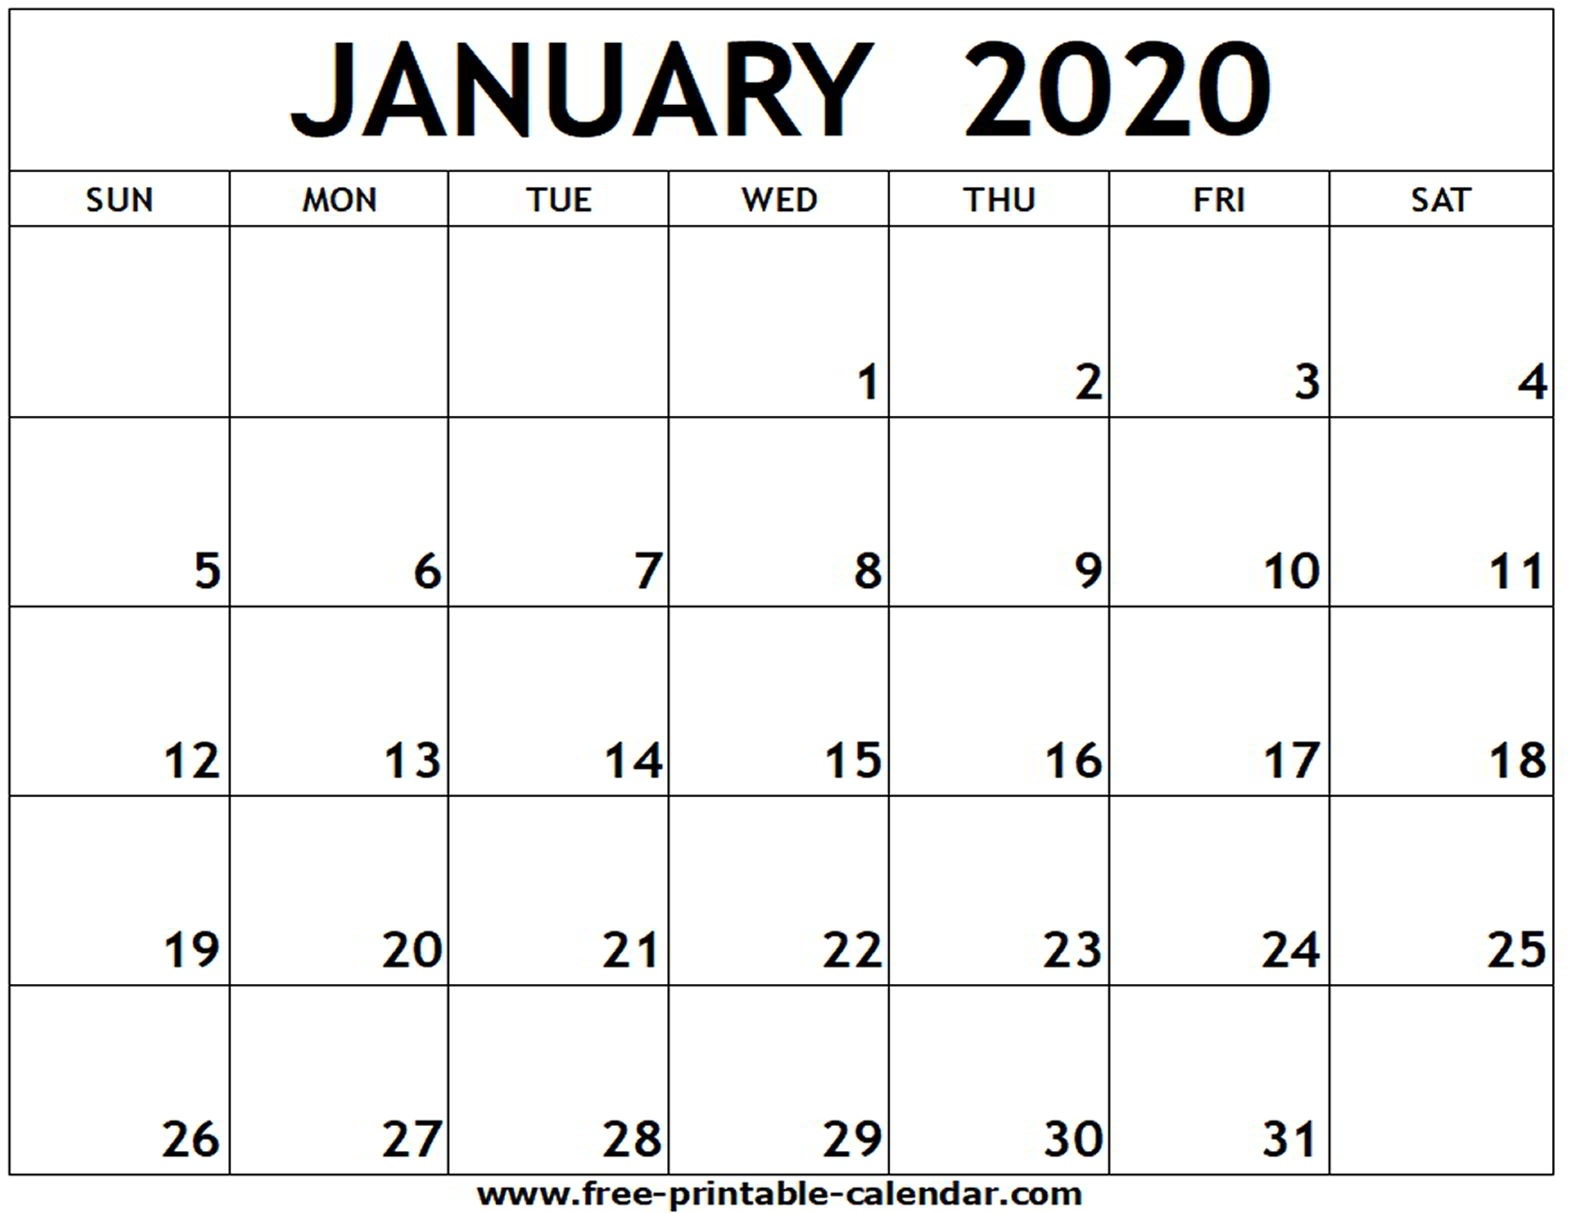 January 2020 Printable Calendar – Free-Printable-Calendar